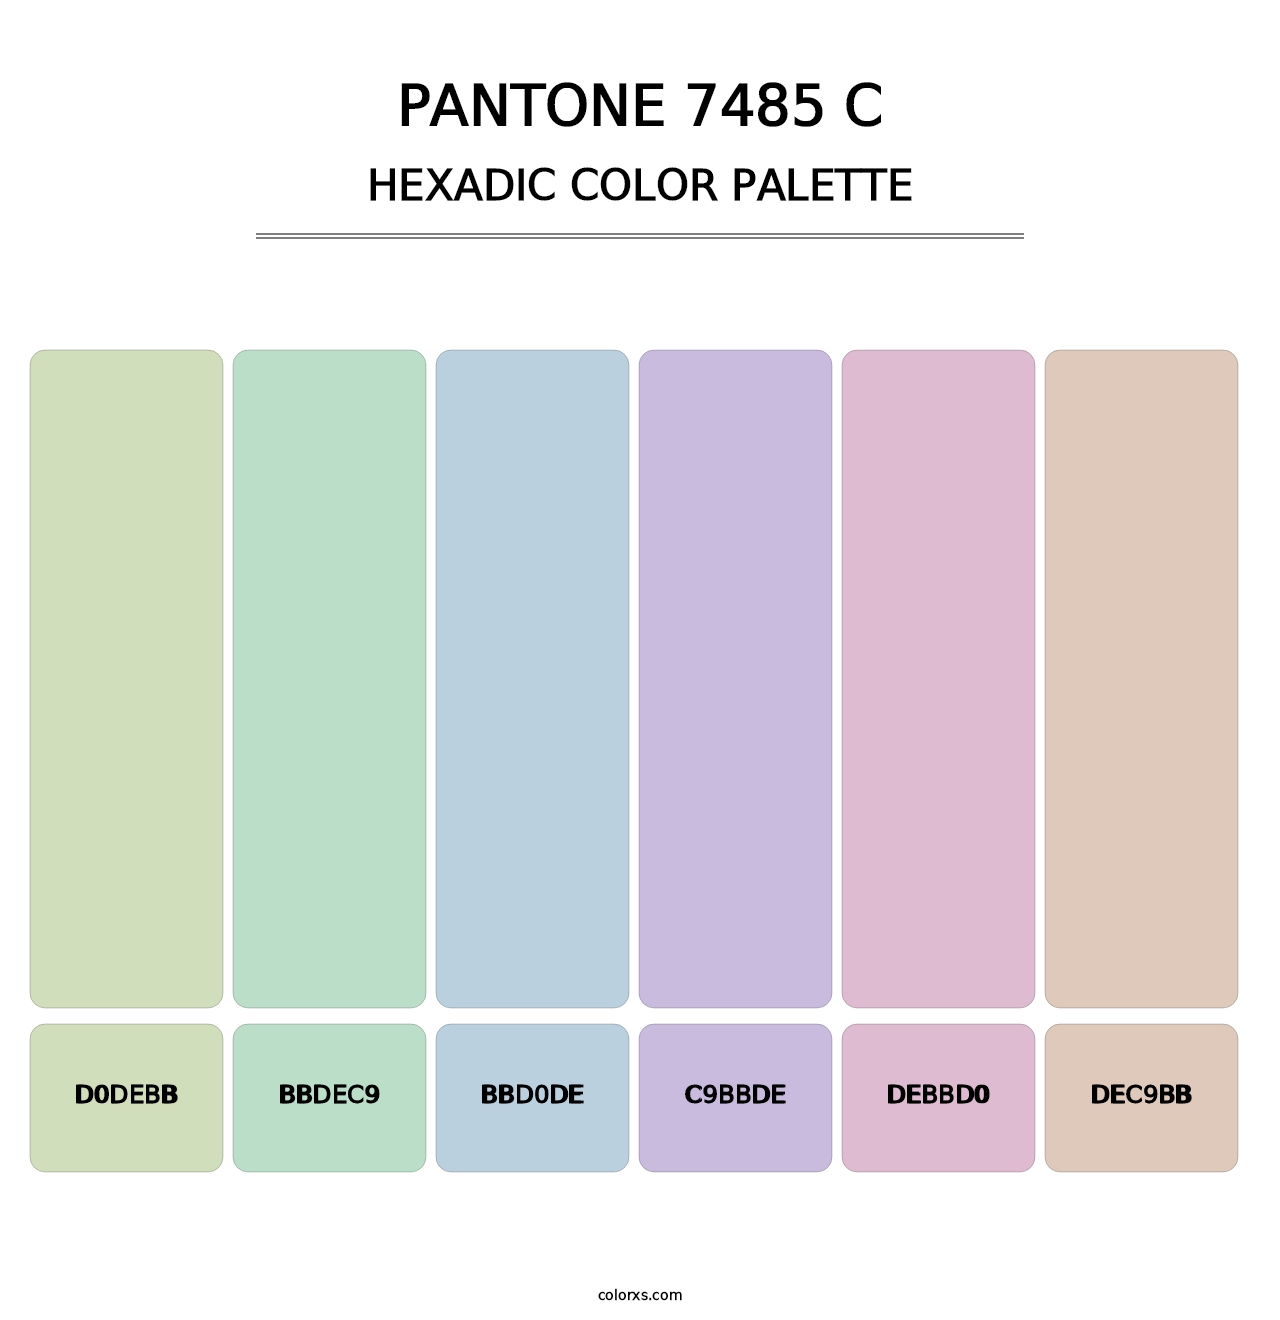 PANTONE 7485 C - Hexadic Color Palette